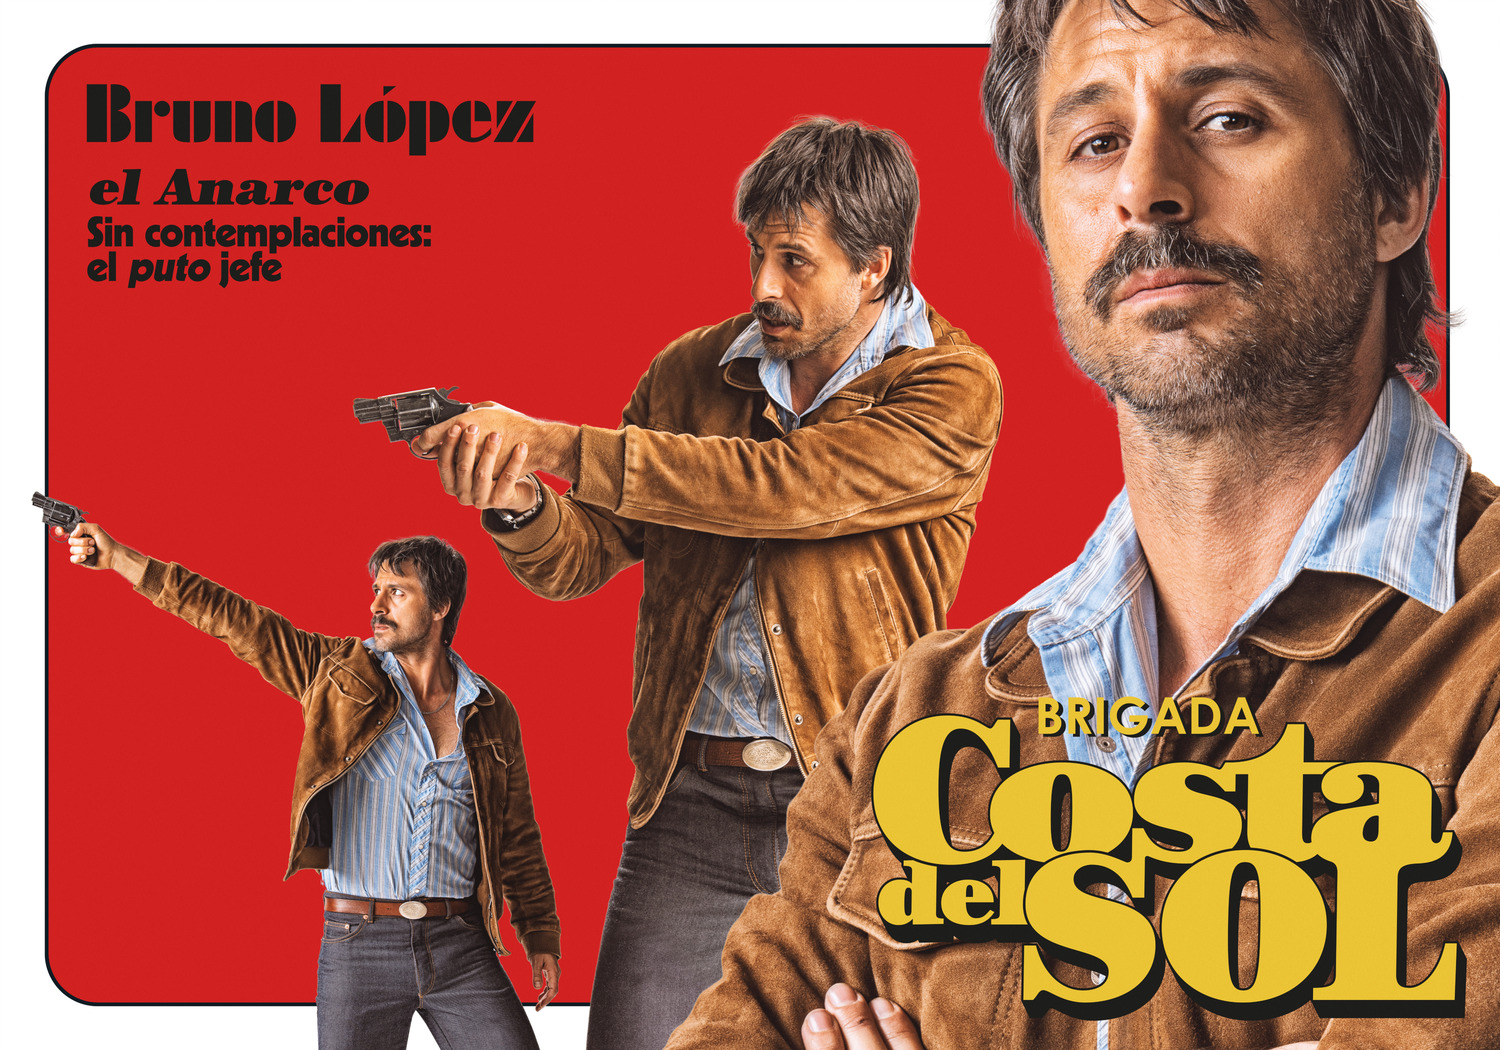 Extra Large TV Poster Image for Brigada Costa del Sol (#16 of 23)